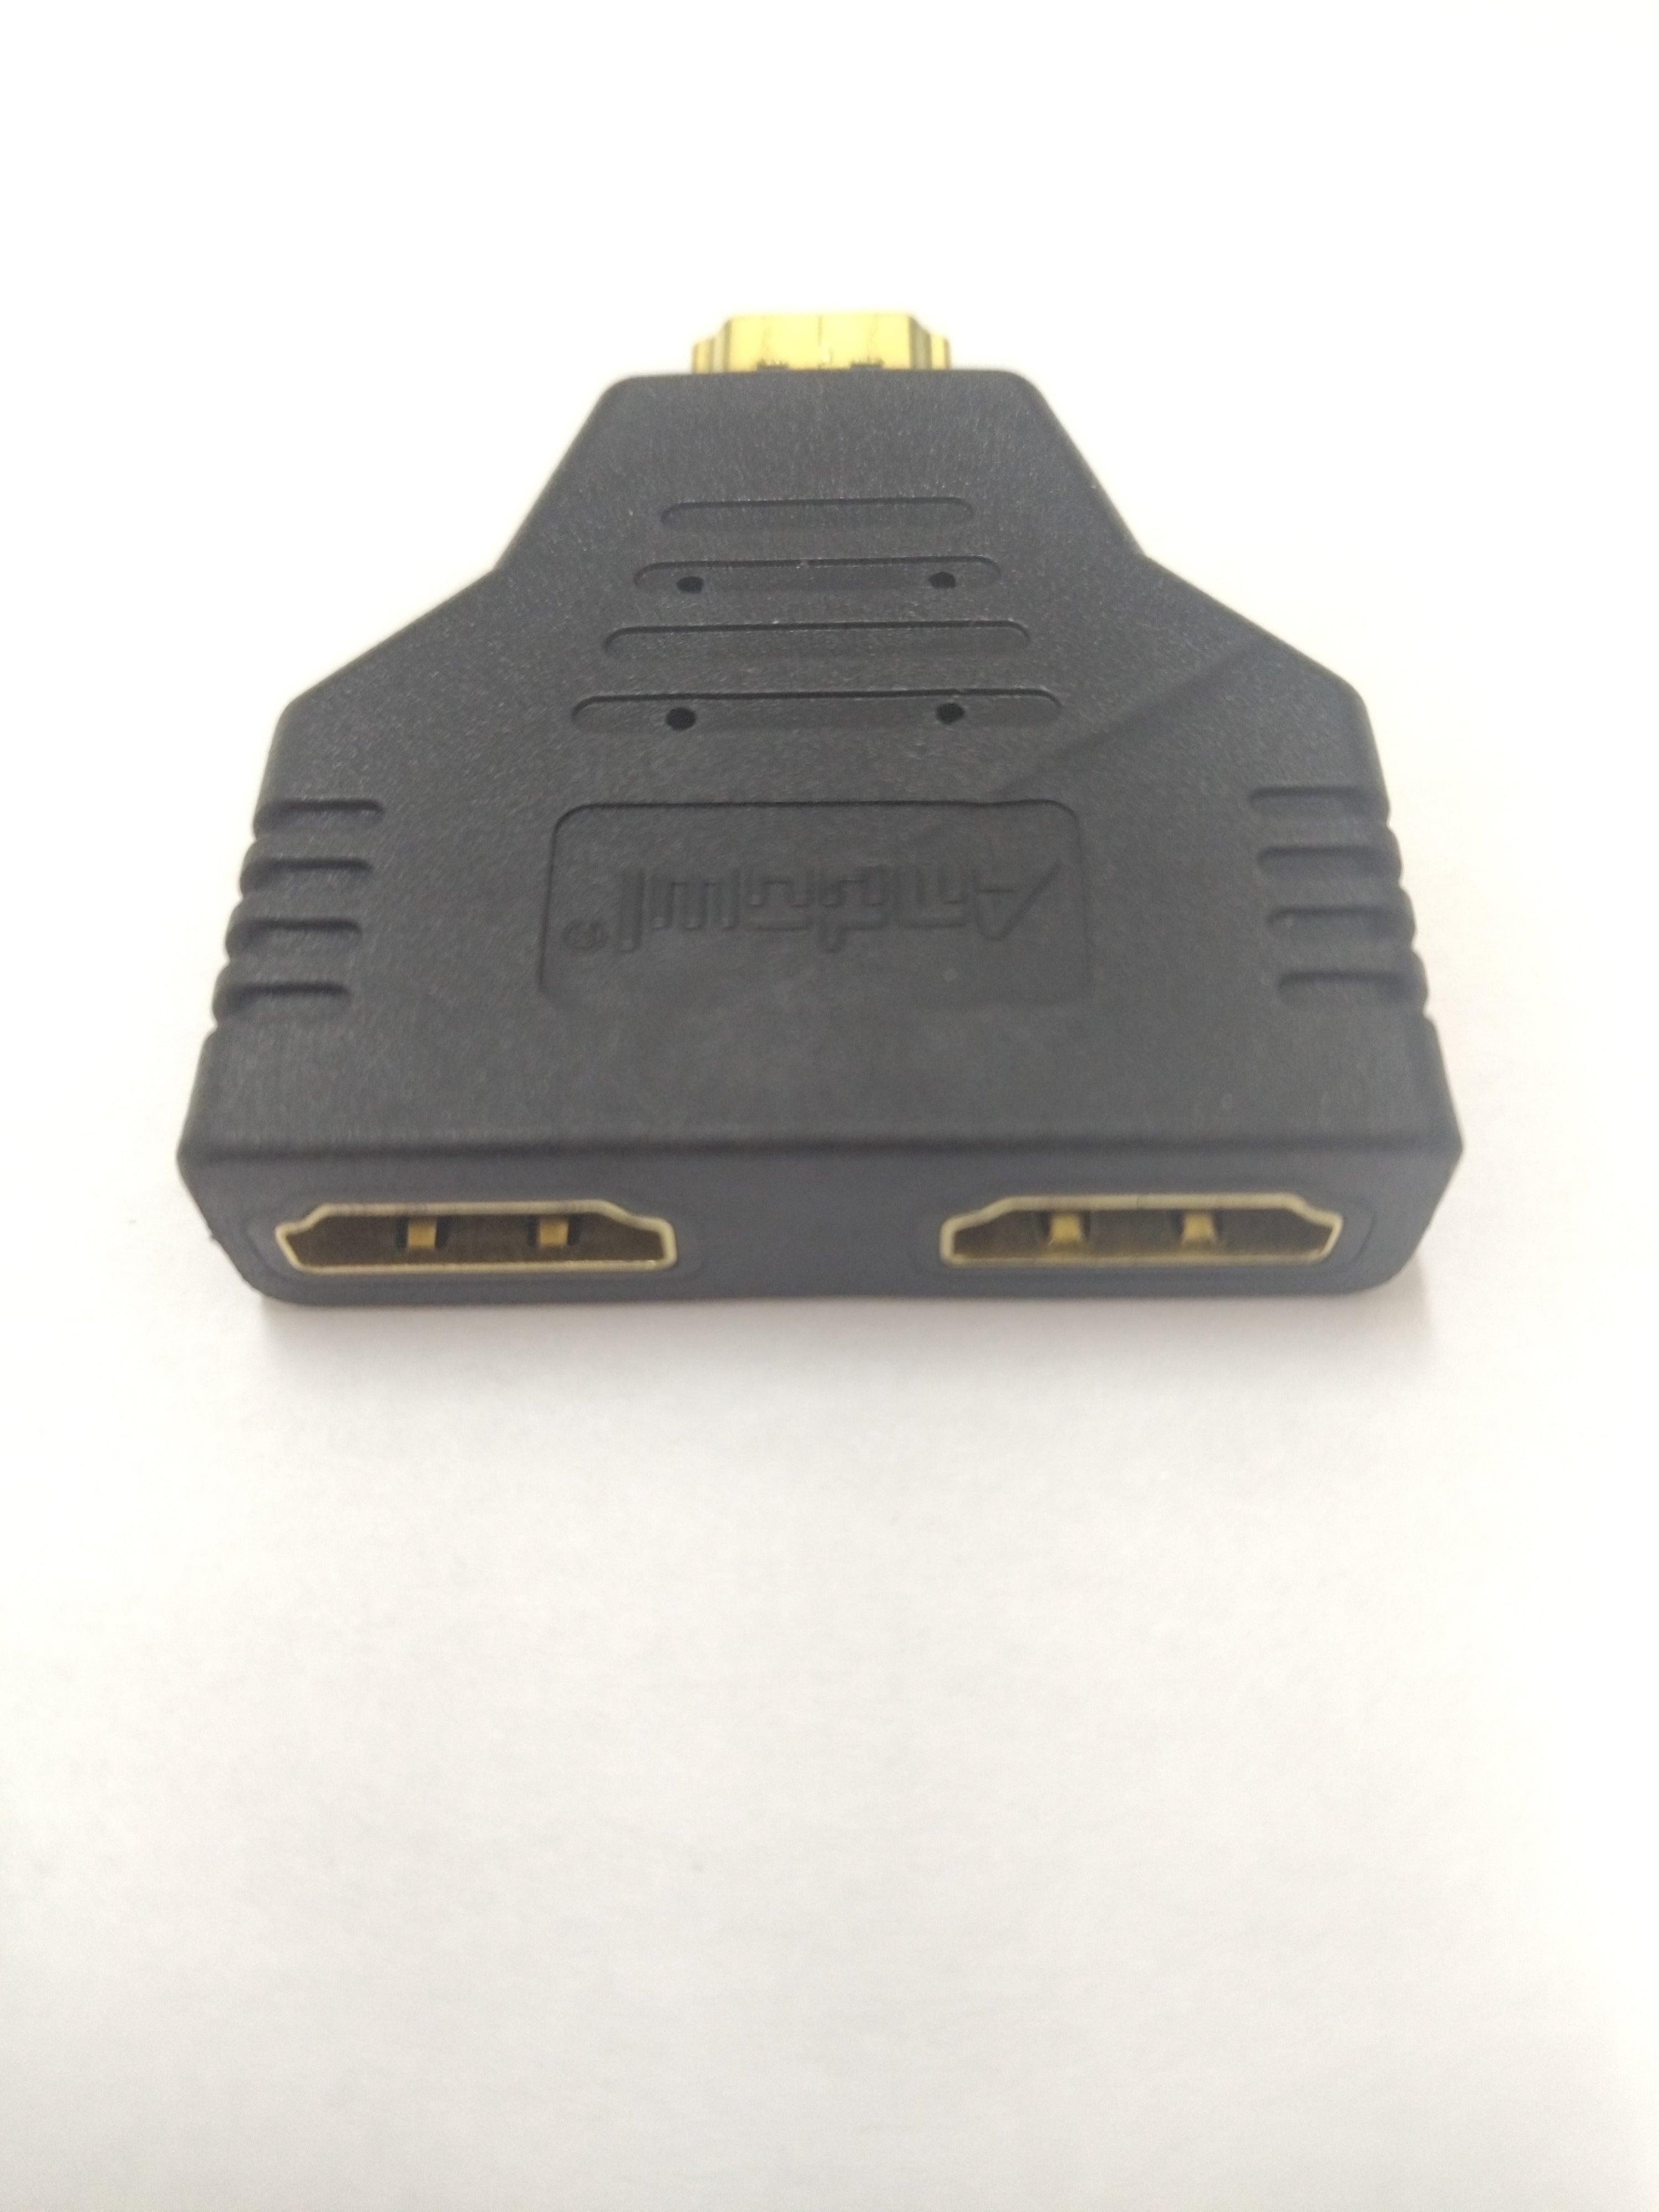 ANDOWL HDMI DISTRIBUTOR MALE TO 2FEMALE - 1's - NeonSales